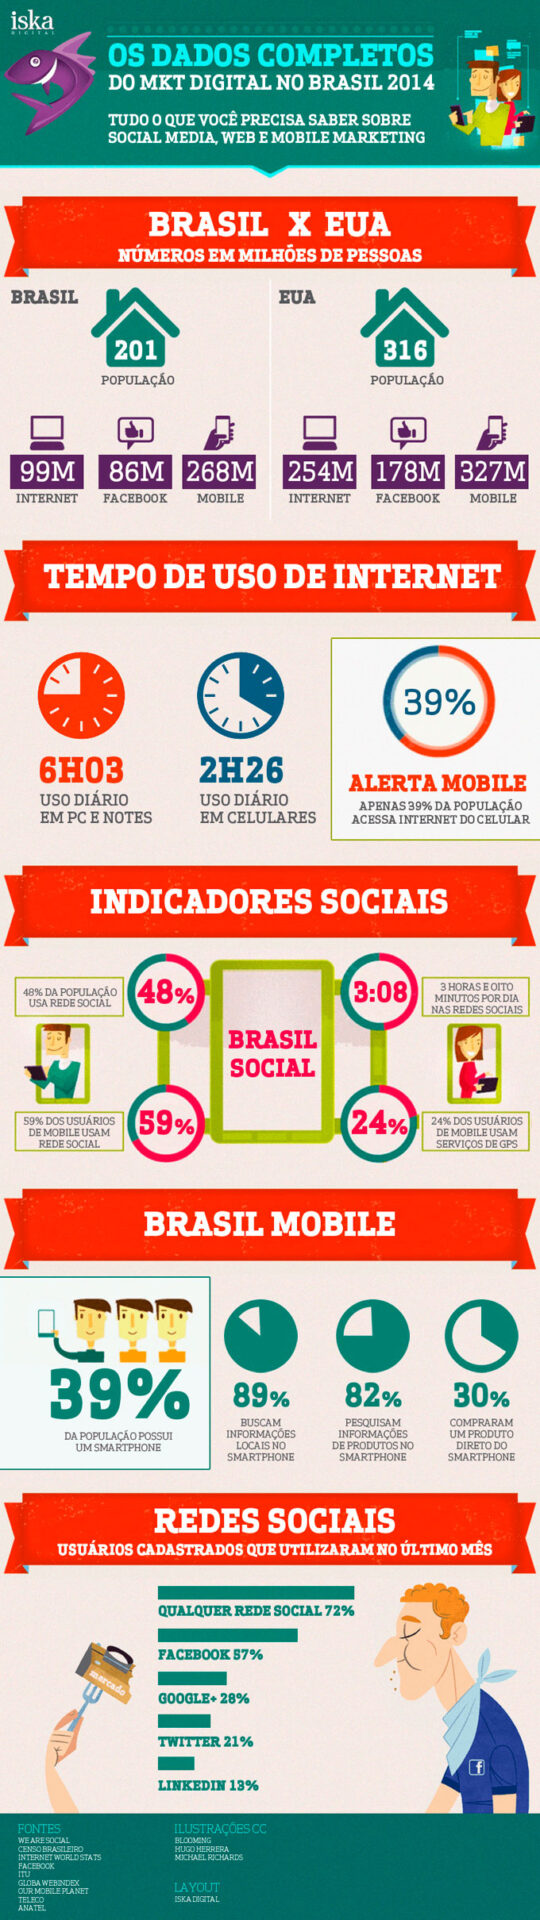 Infográfico: Marketing Digital no Brasil em 2014.